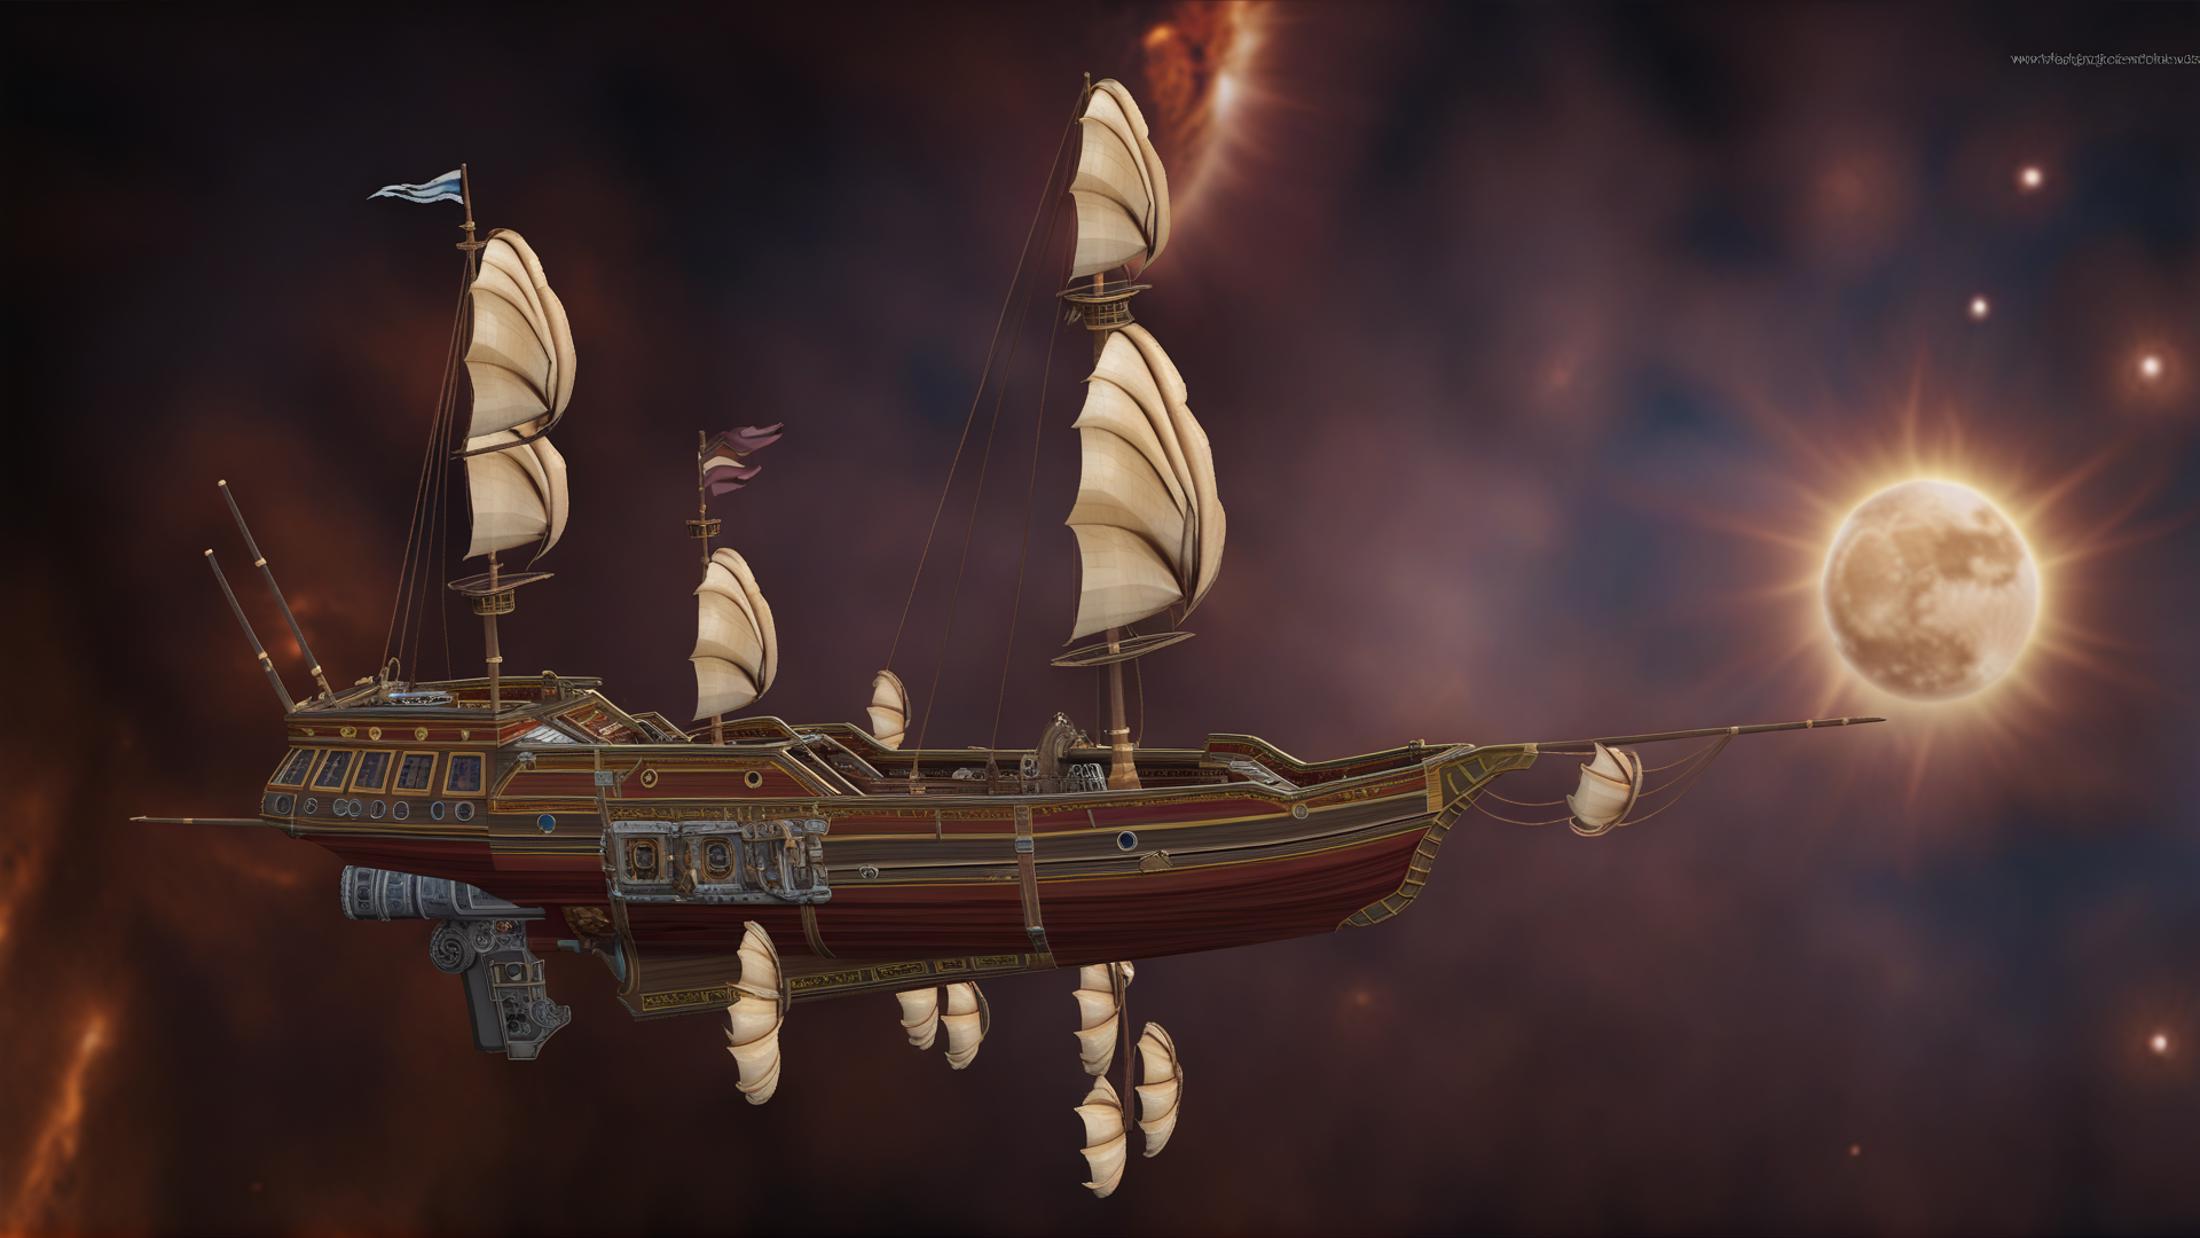 Treasure Planet Ships (General) image by Mugsy